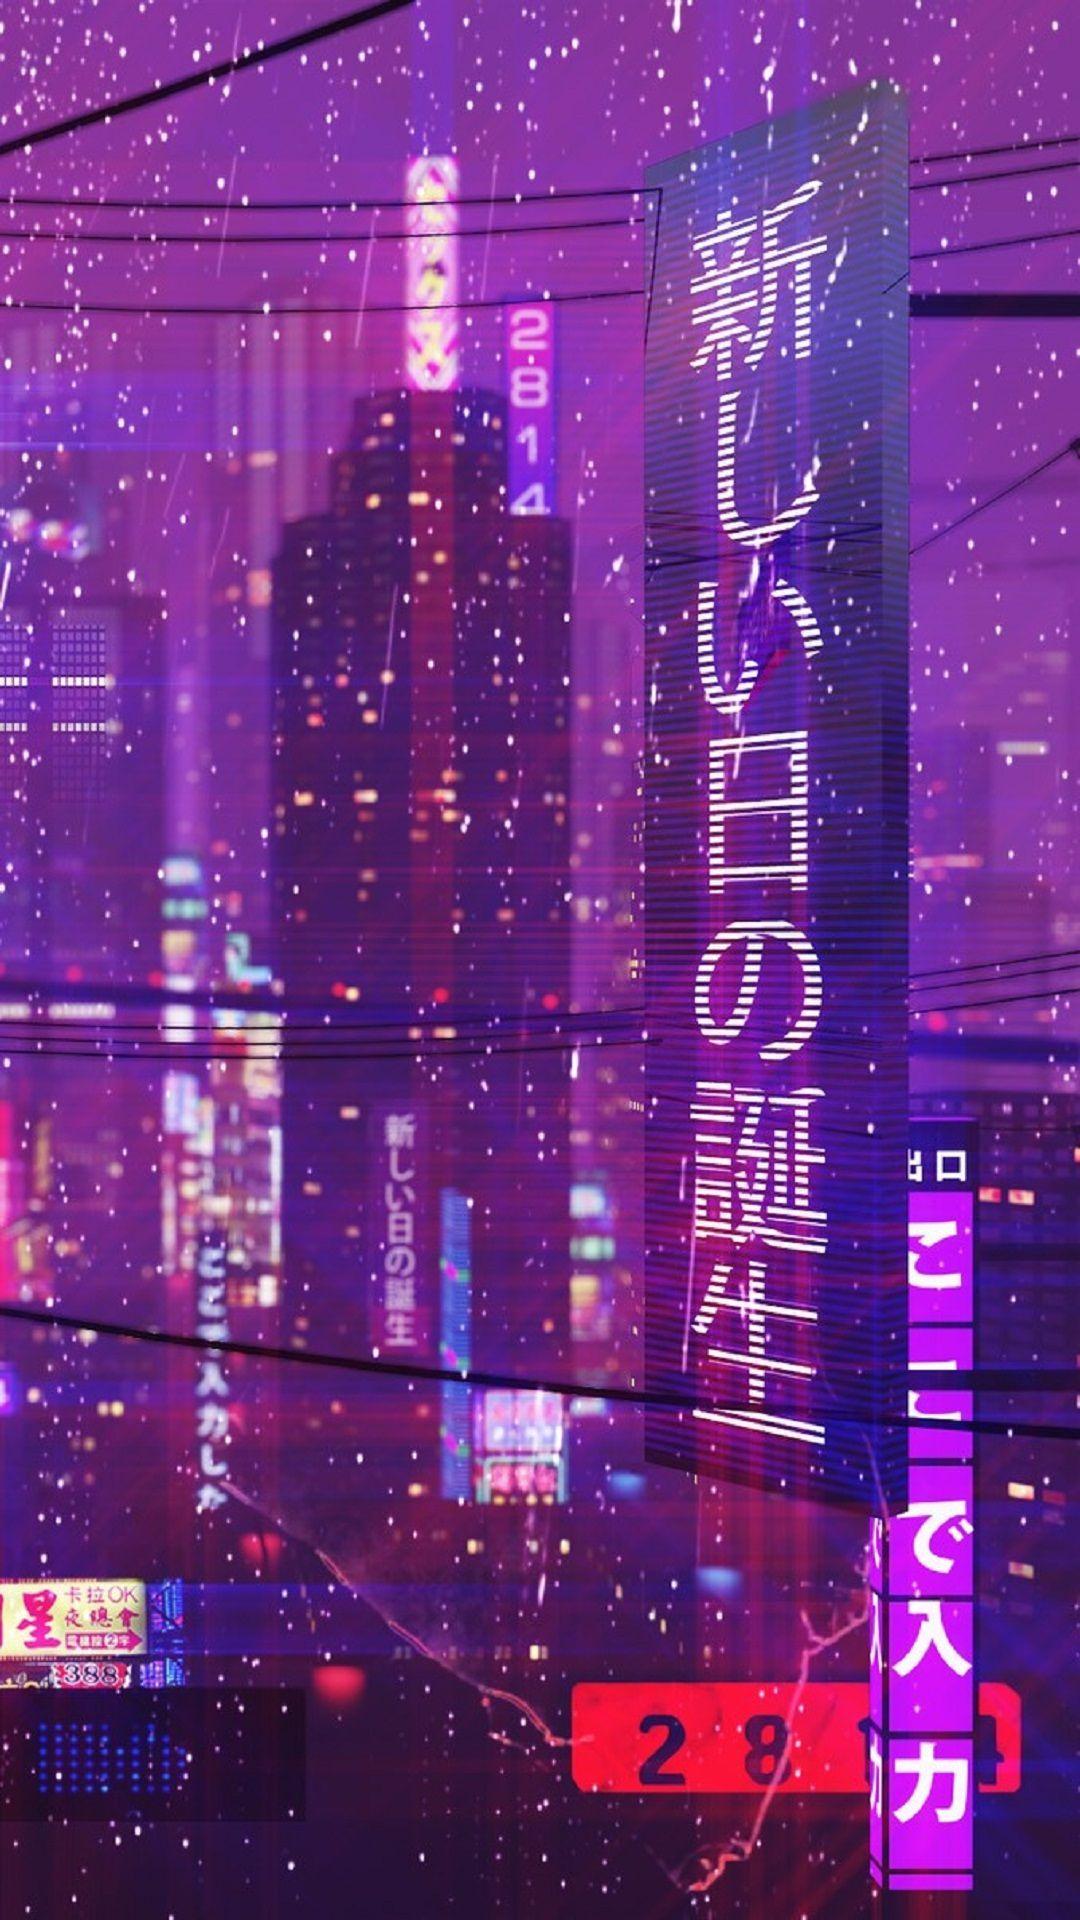 Download Greenish City Cyberpunk iPhone X Wallpaper